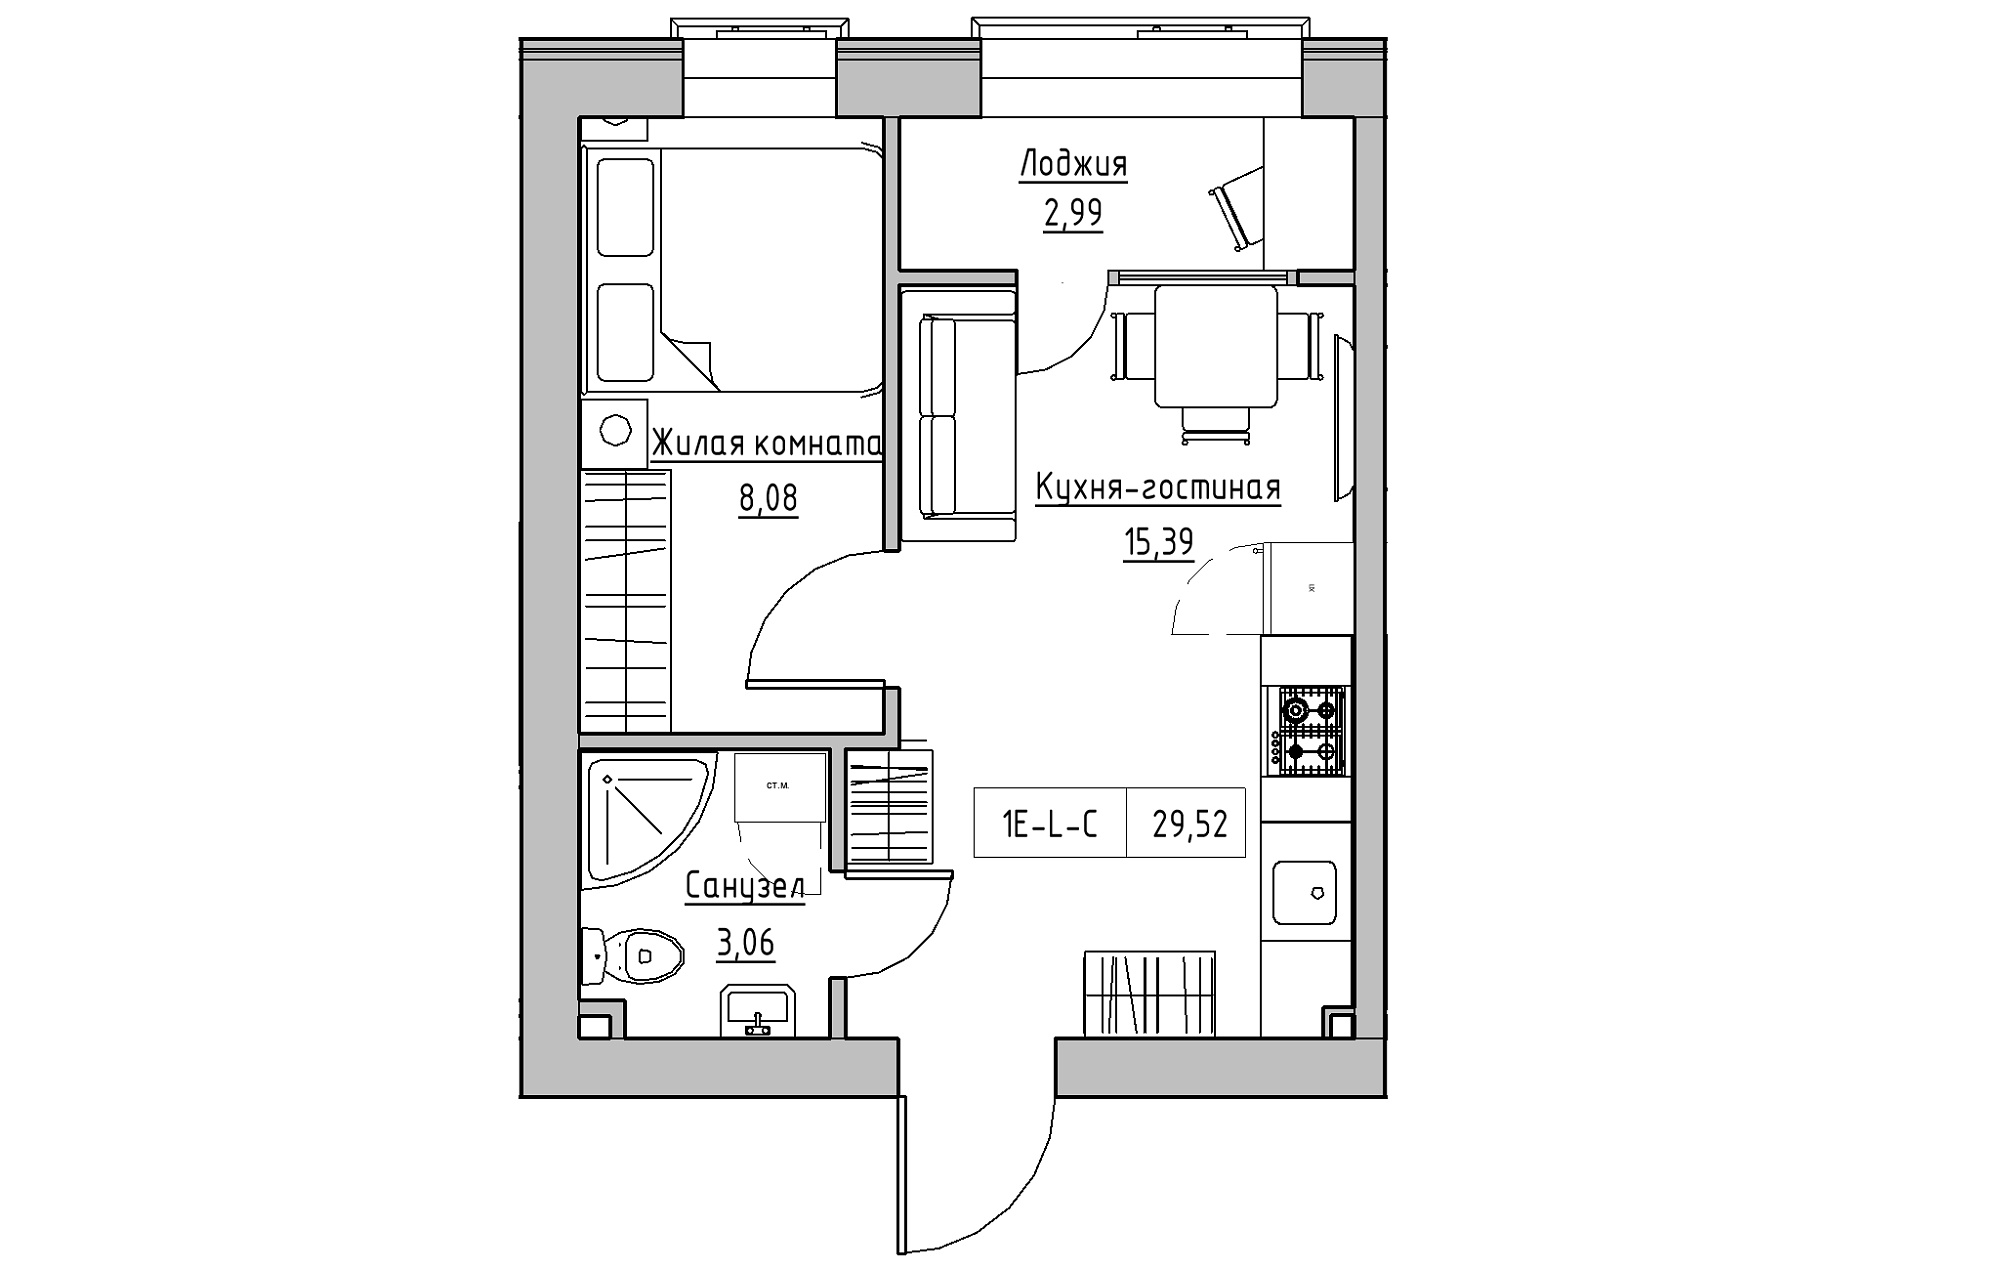 Planning 1-rm flats area 29.52m2, KS-018-02/0006.